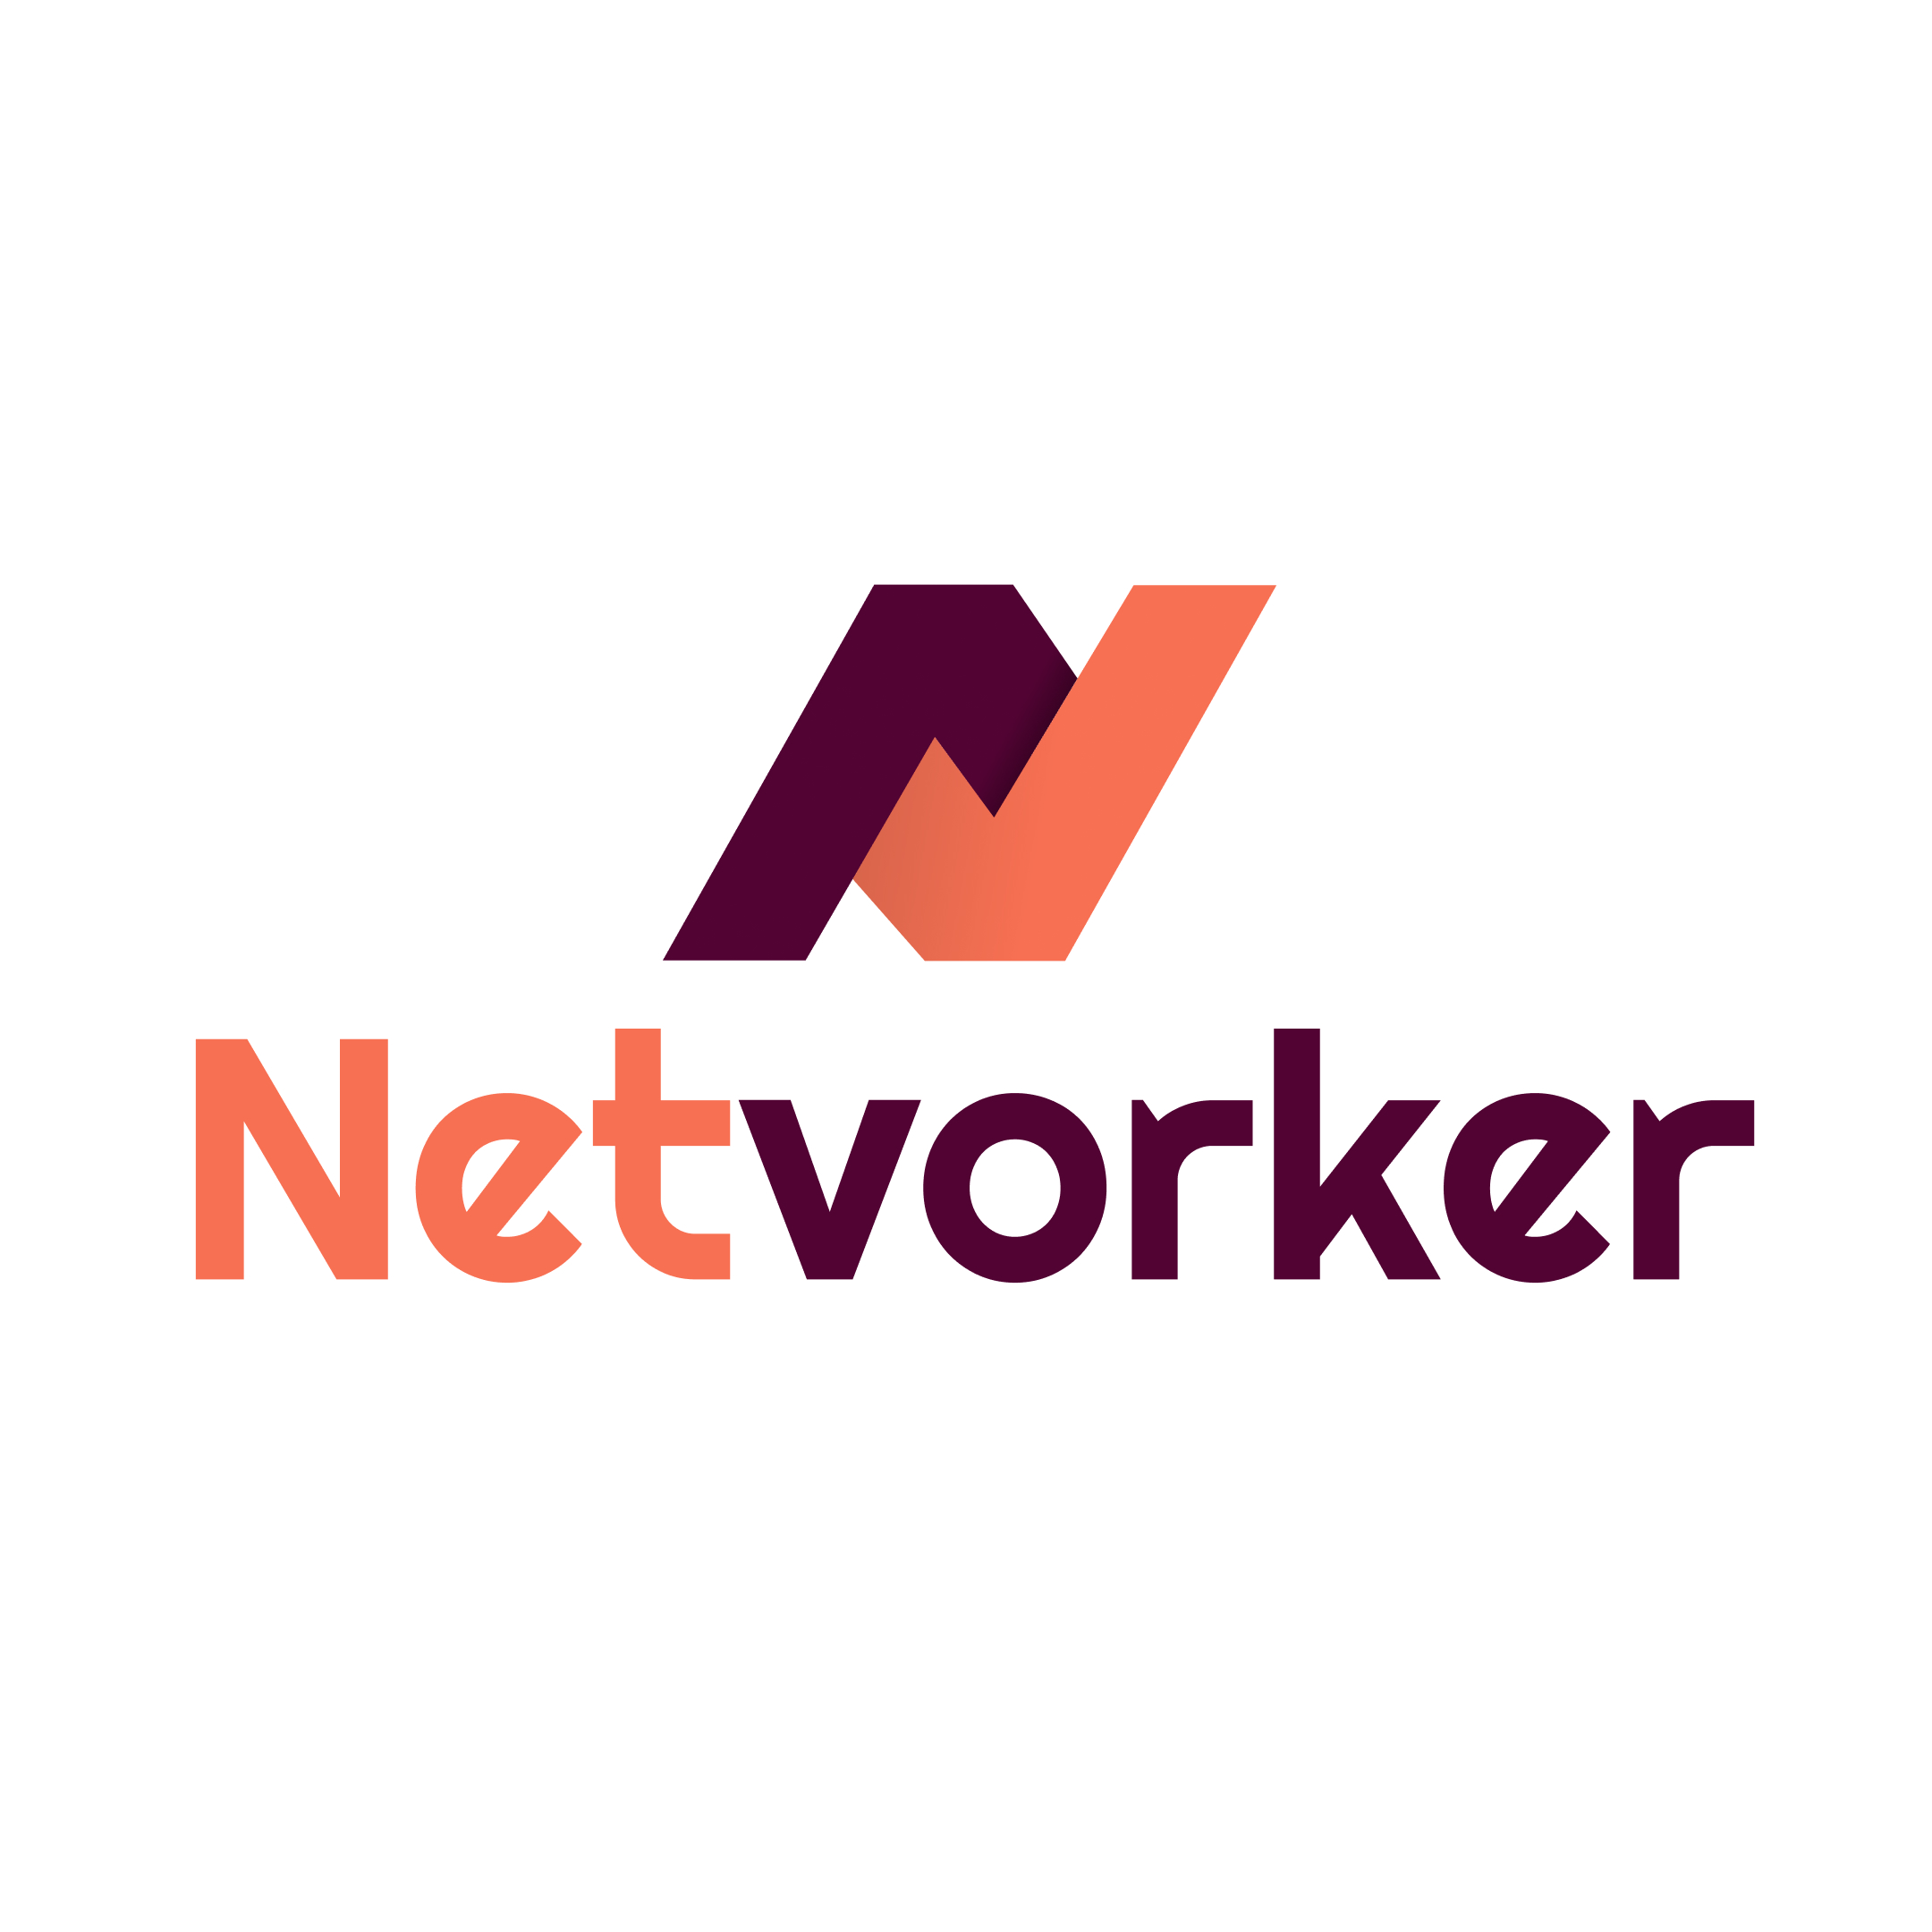 Company logo of Netvorker